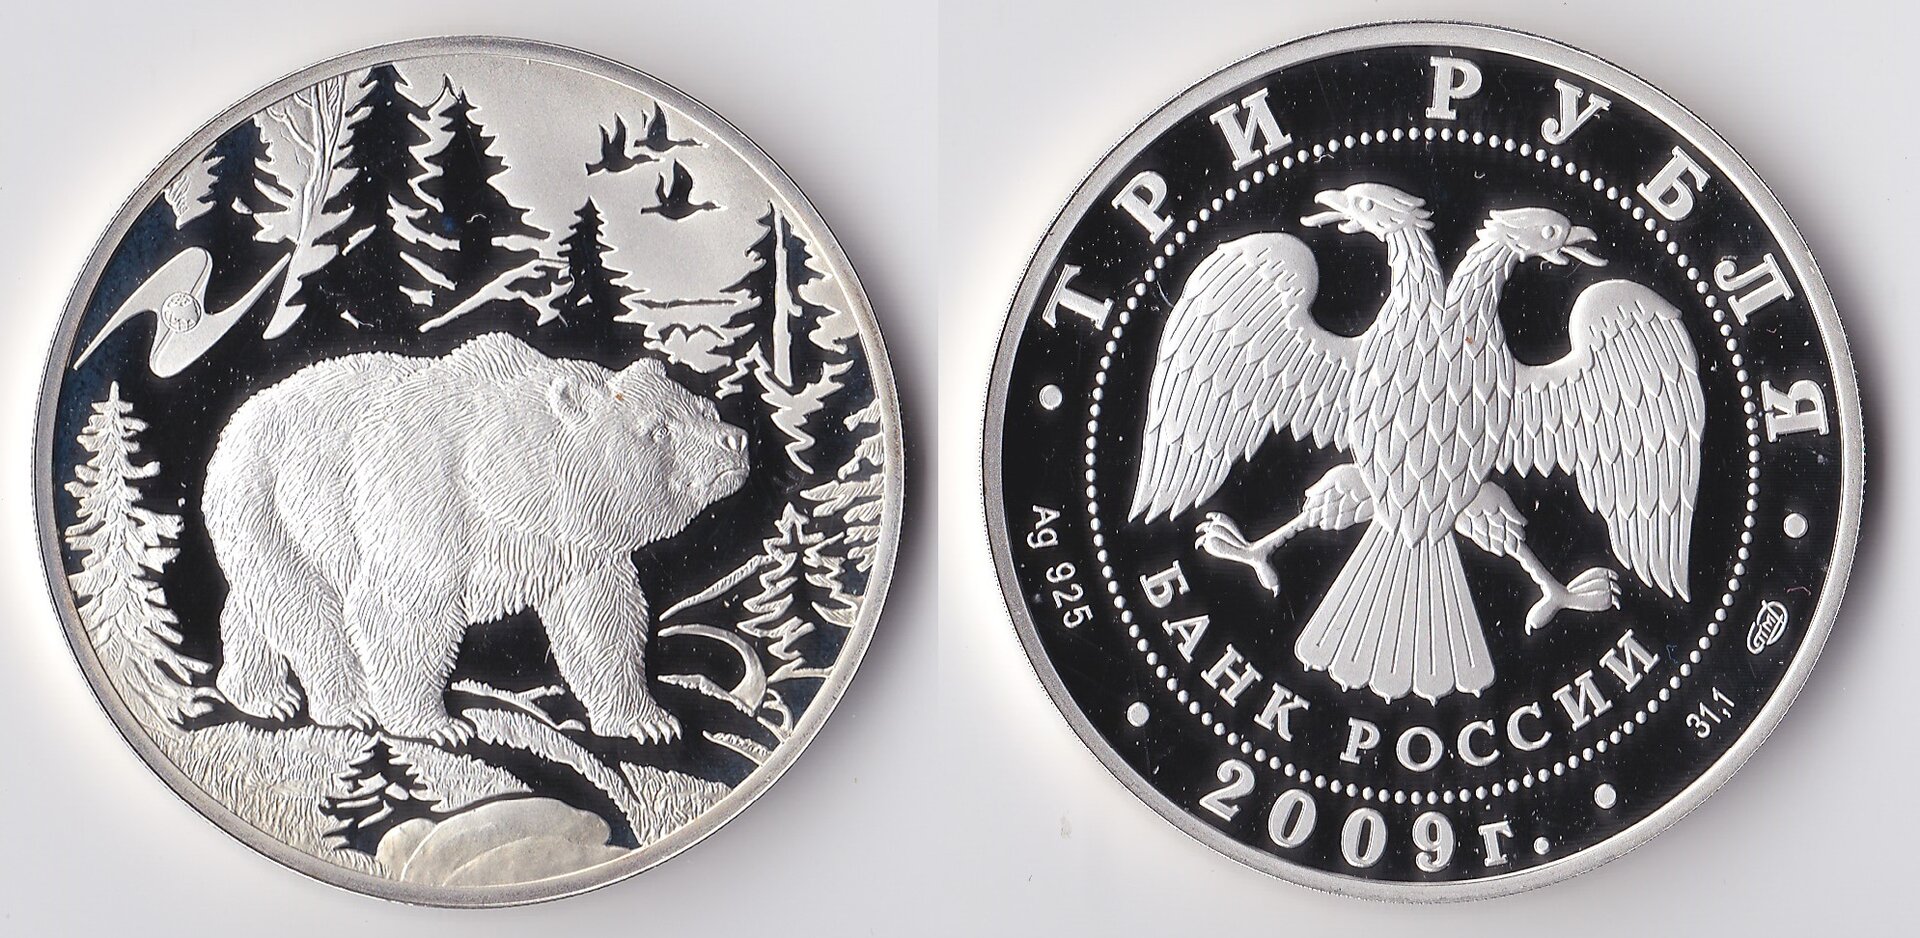 2009 russia 3 rubles.jpg